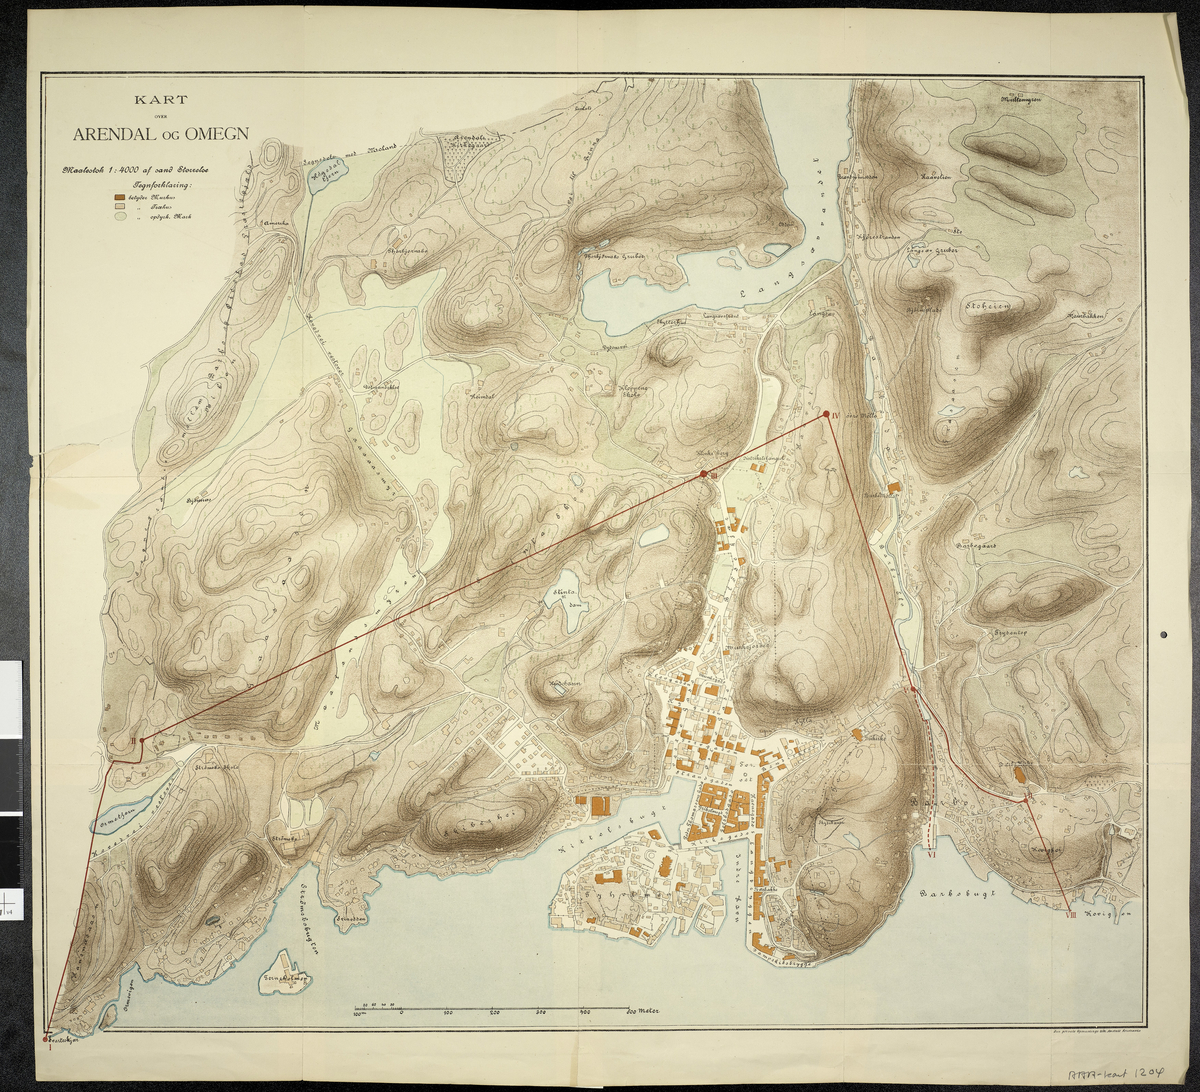 Kart over Arendal og Omegn